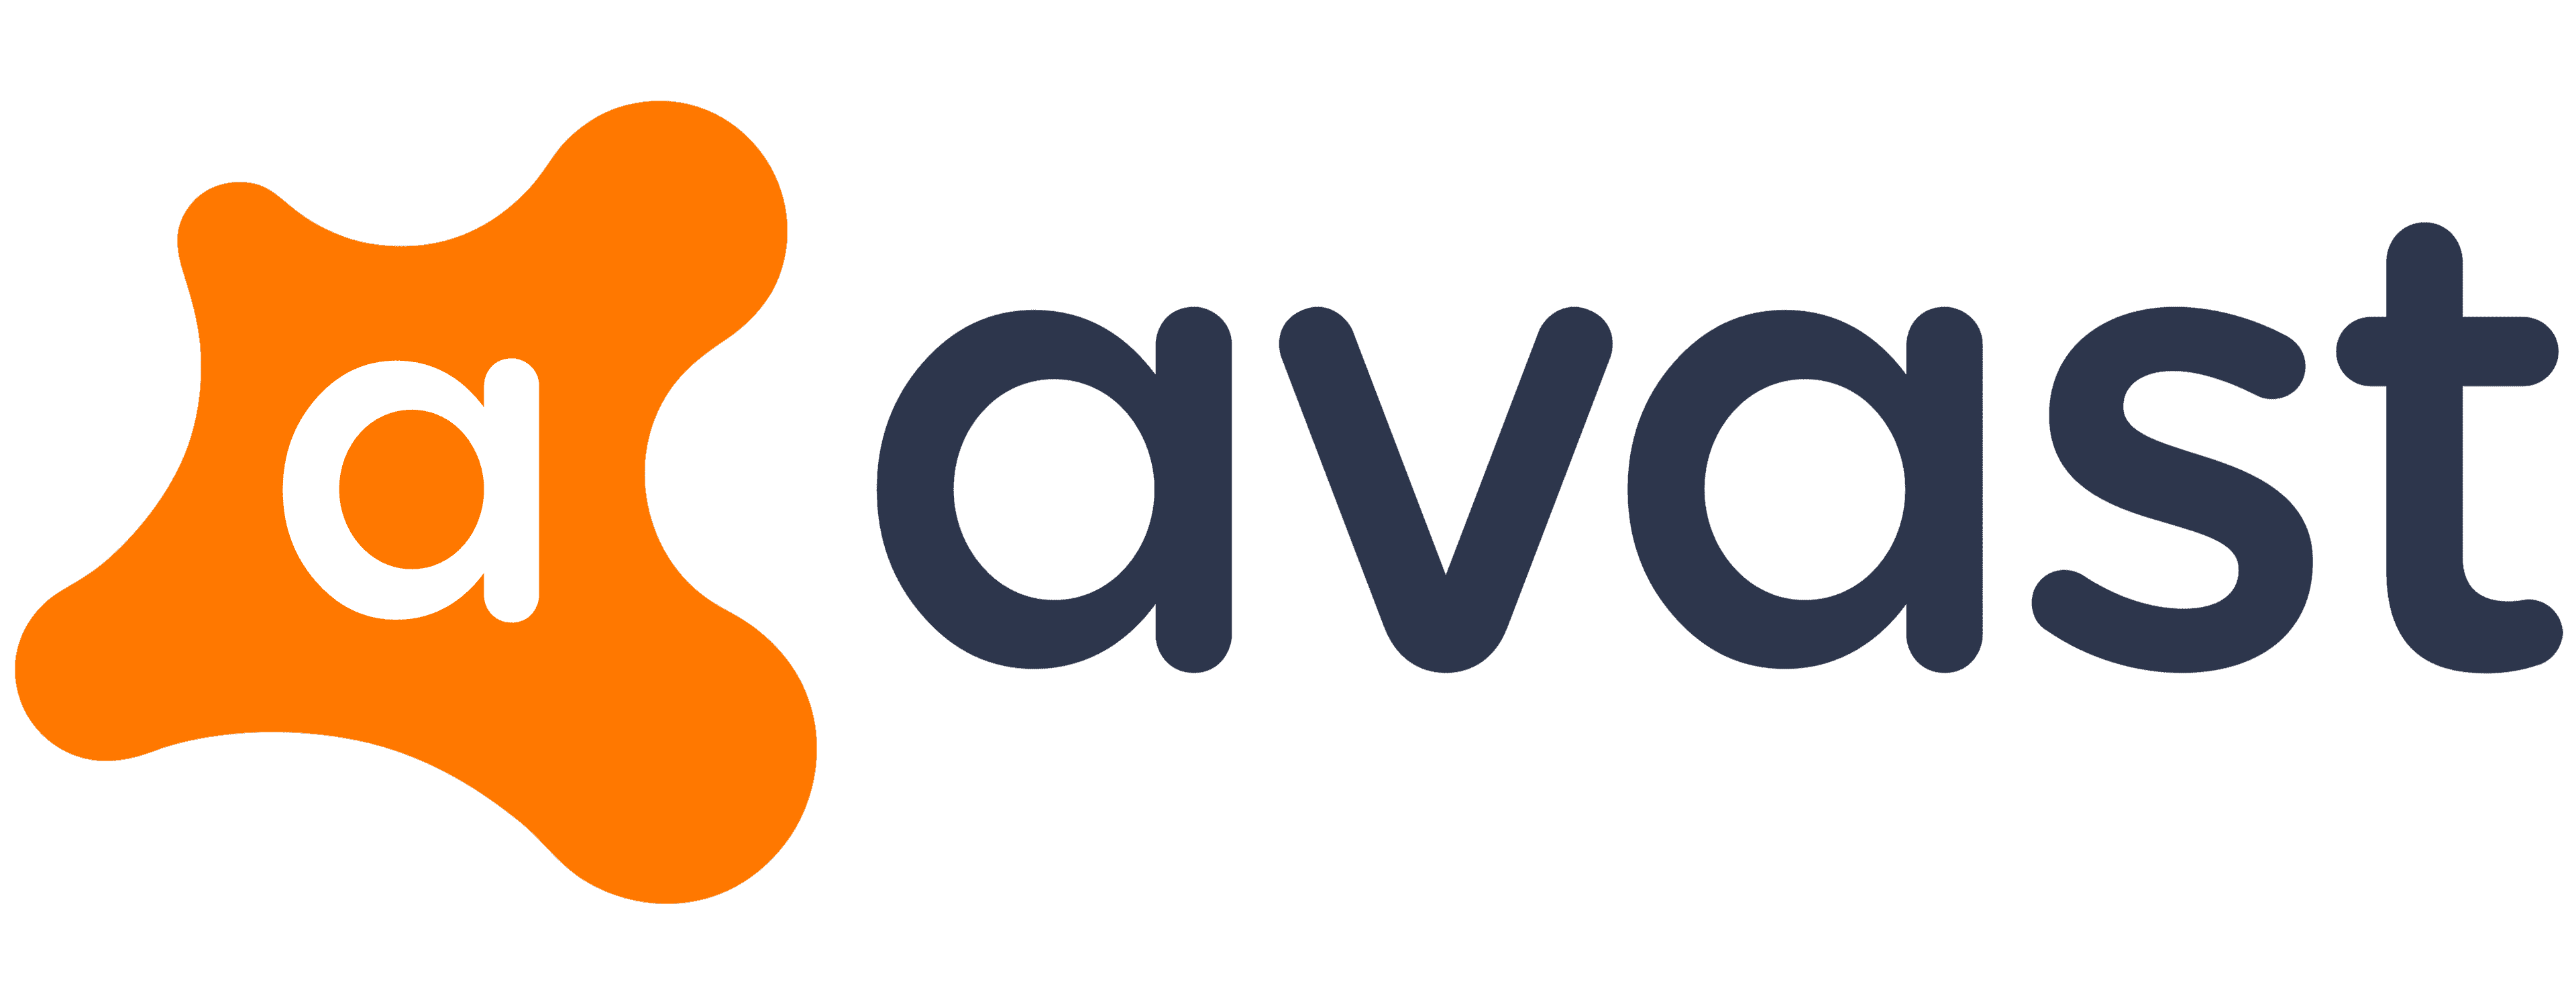 Avast-logo